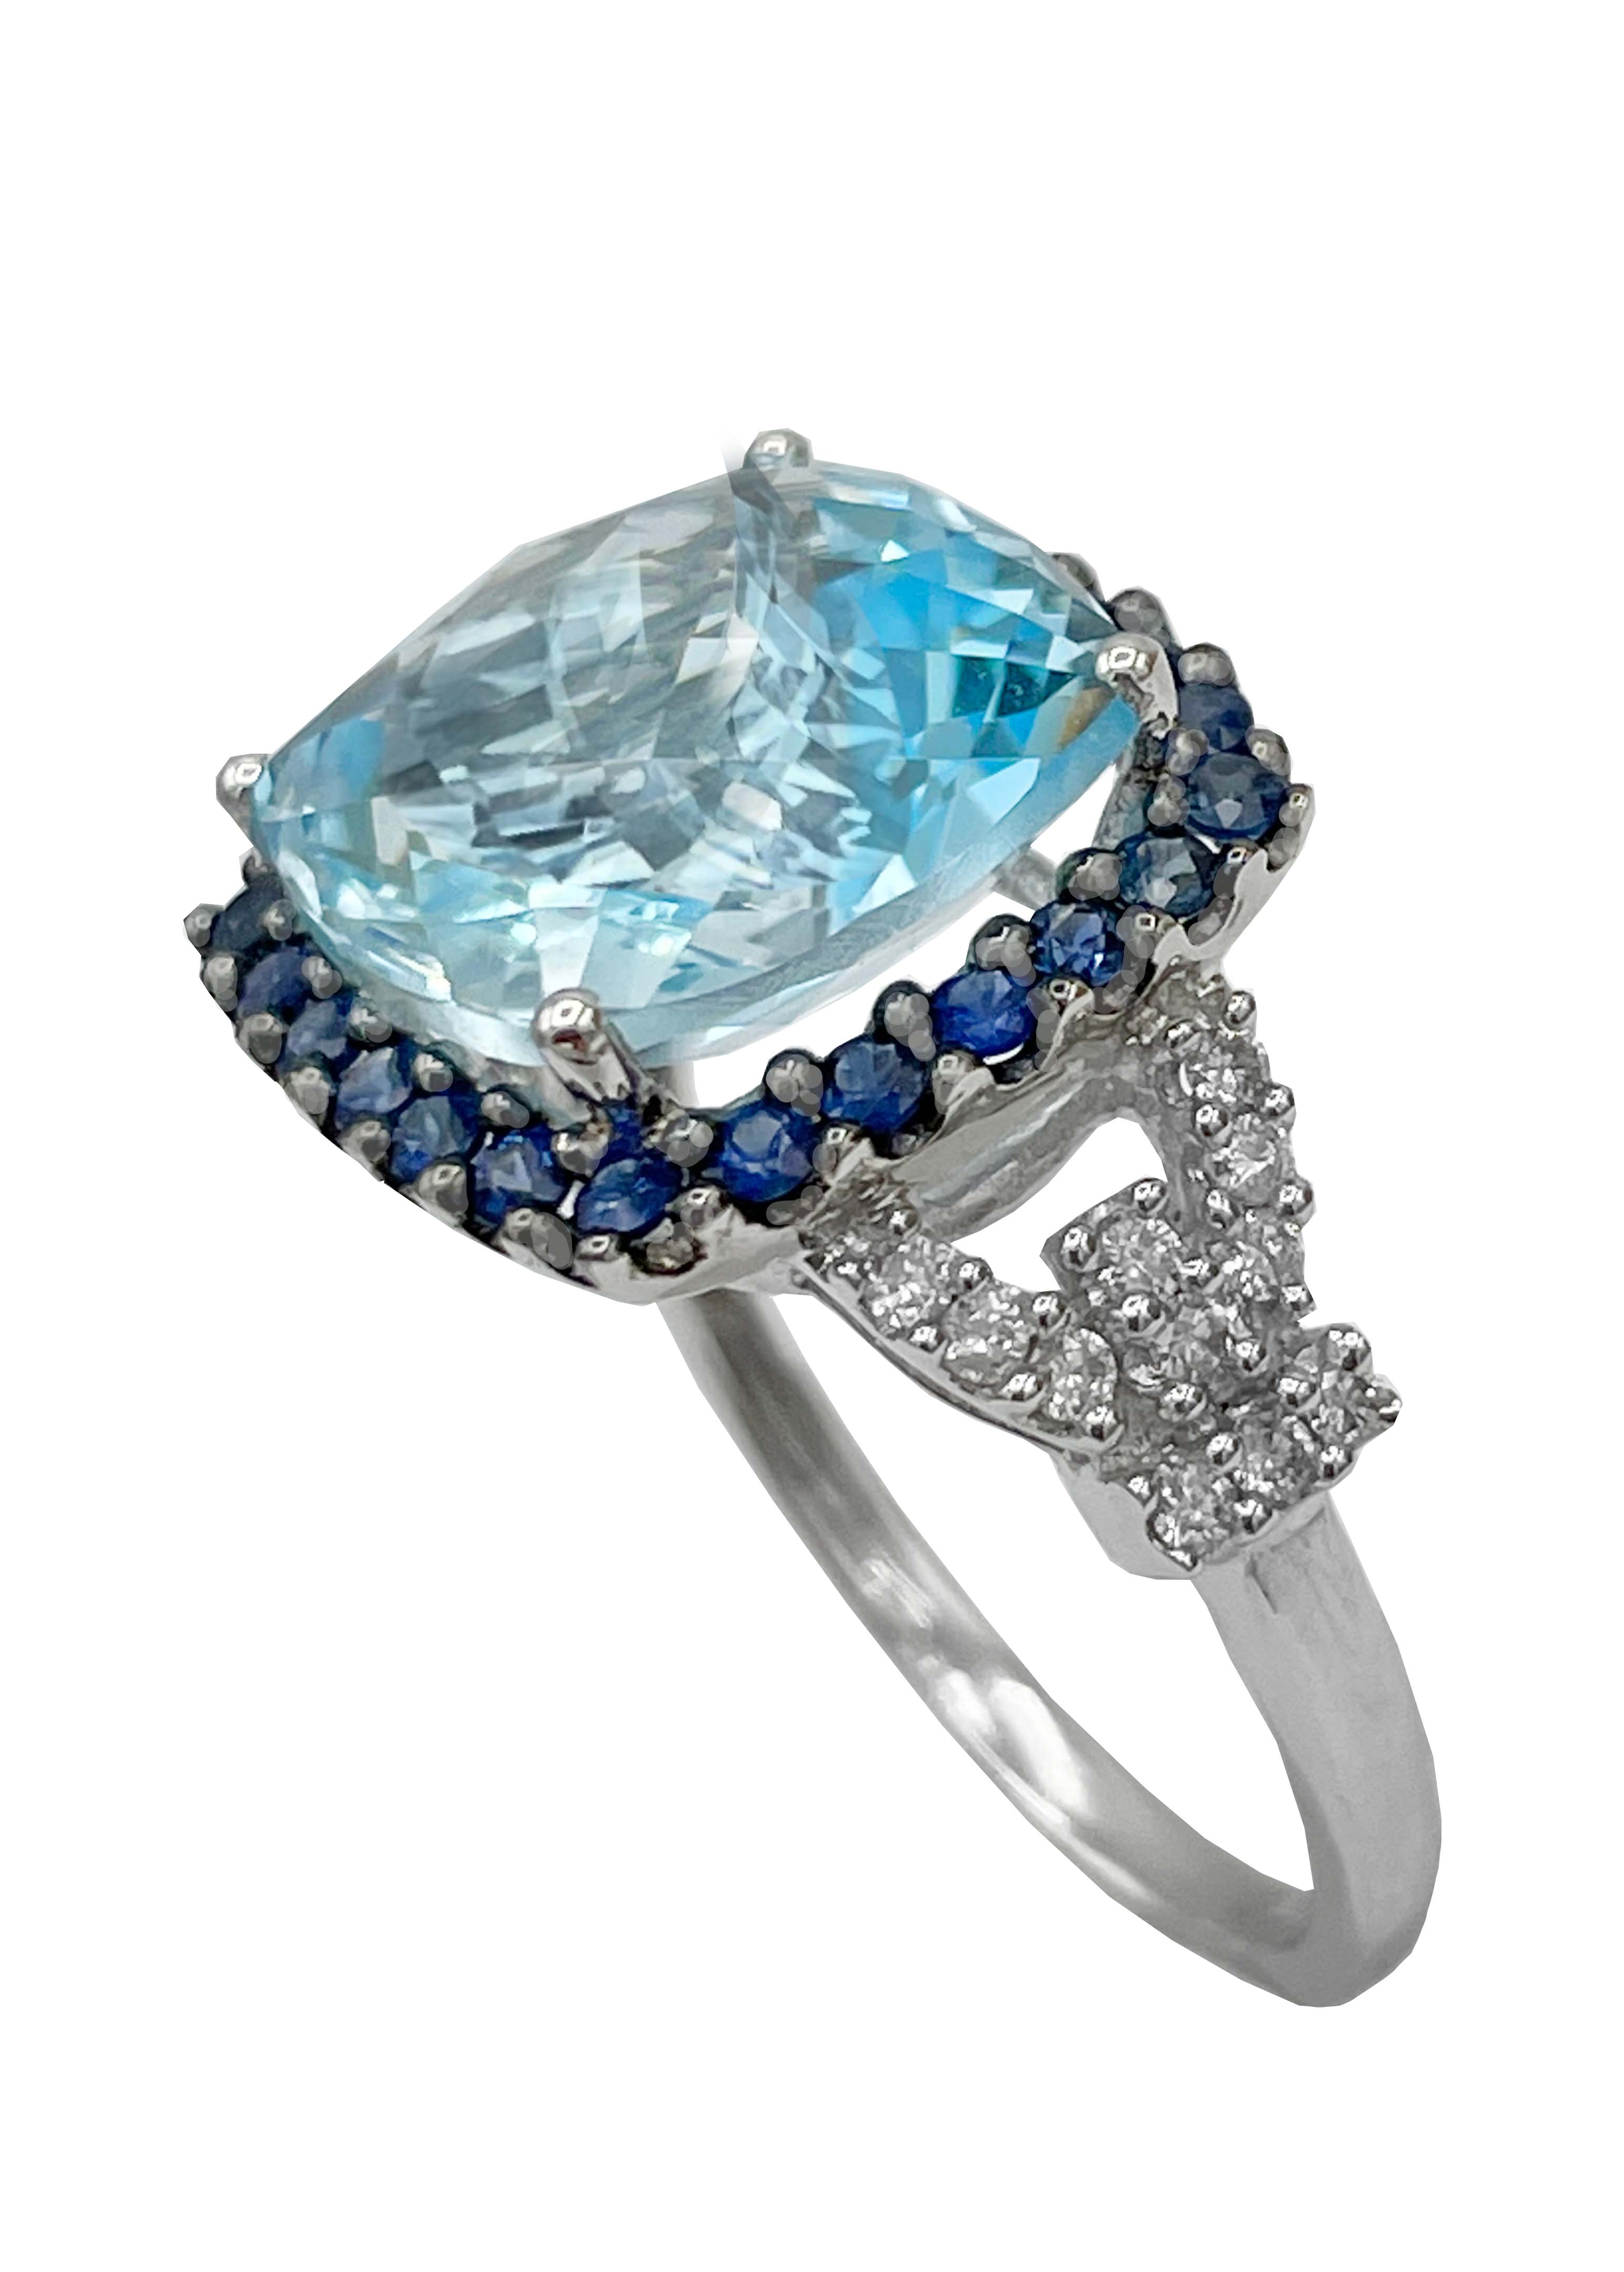 18k White Gold Square Blue Topaz, Diamonds and Sapphires Ring Image